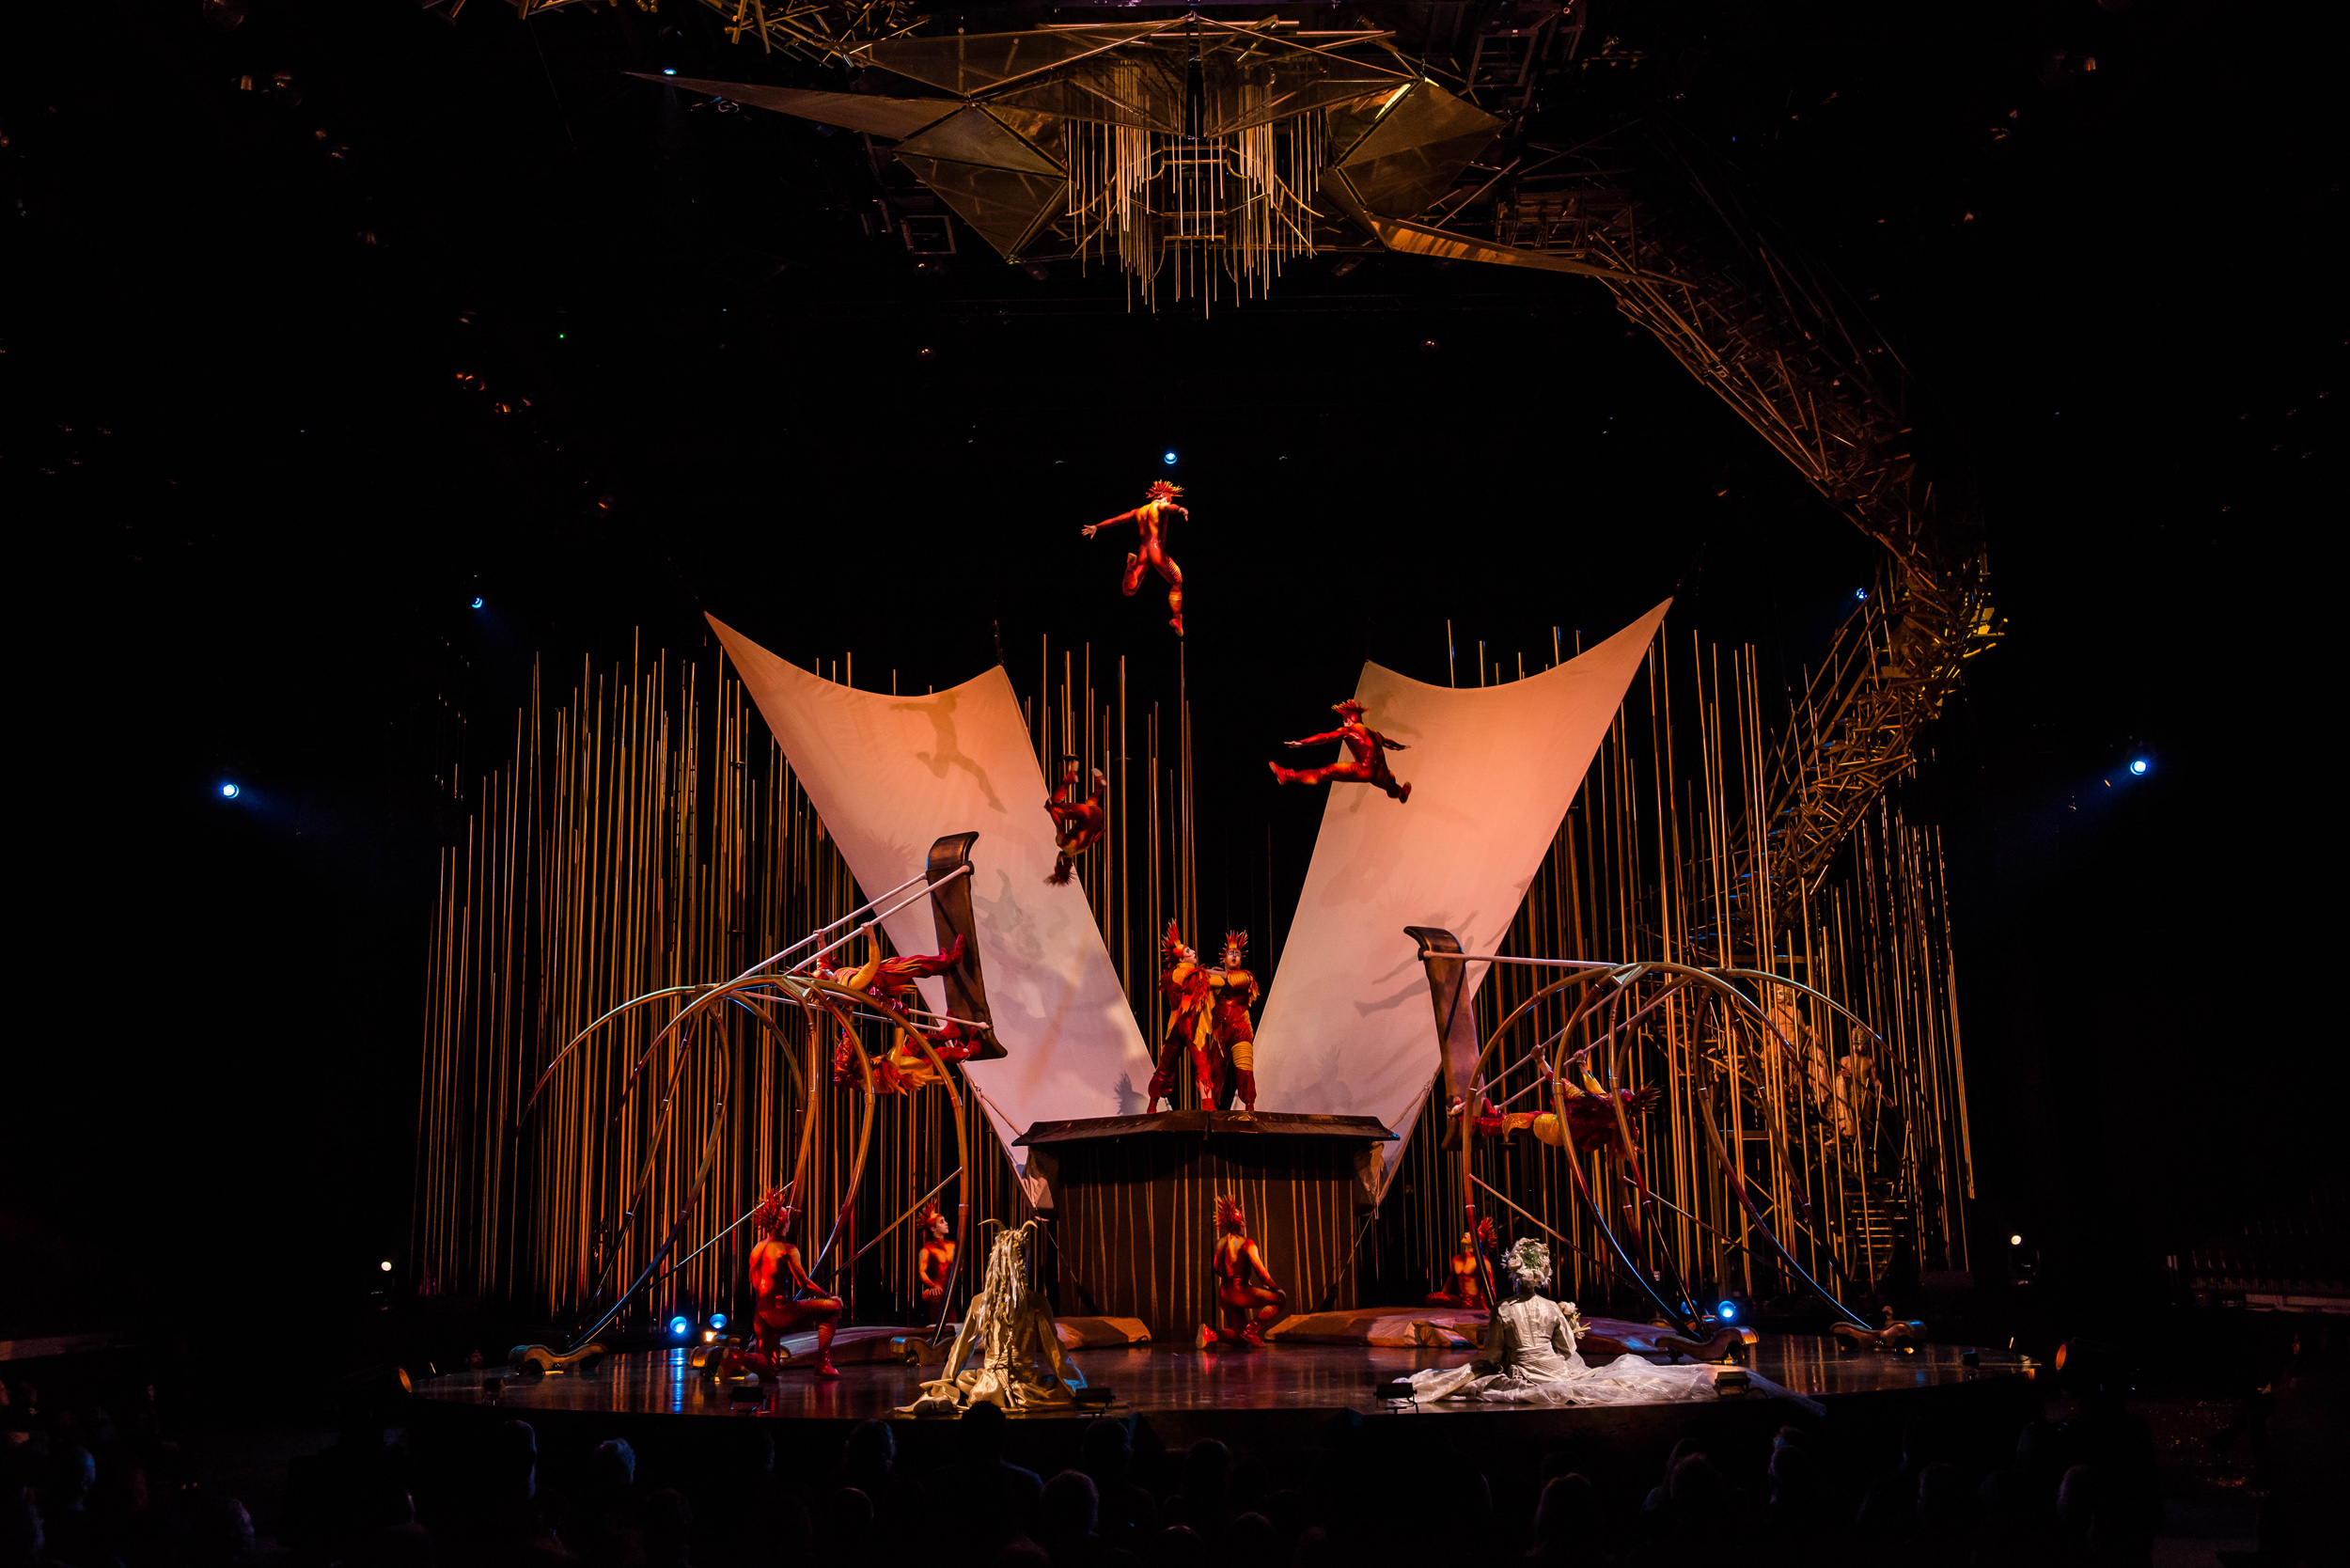 Cirque du Soleil “Vareki” Open Now Through January 11 at the Chaifetz